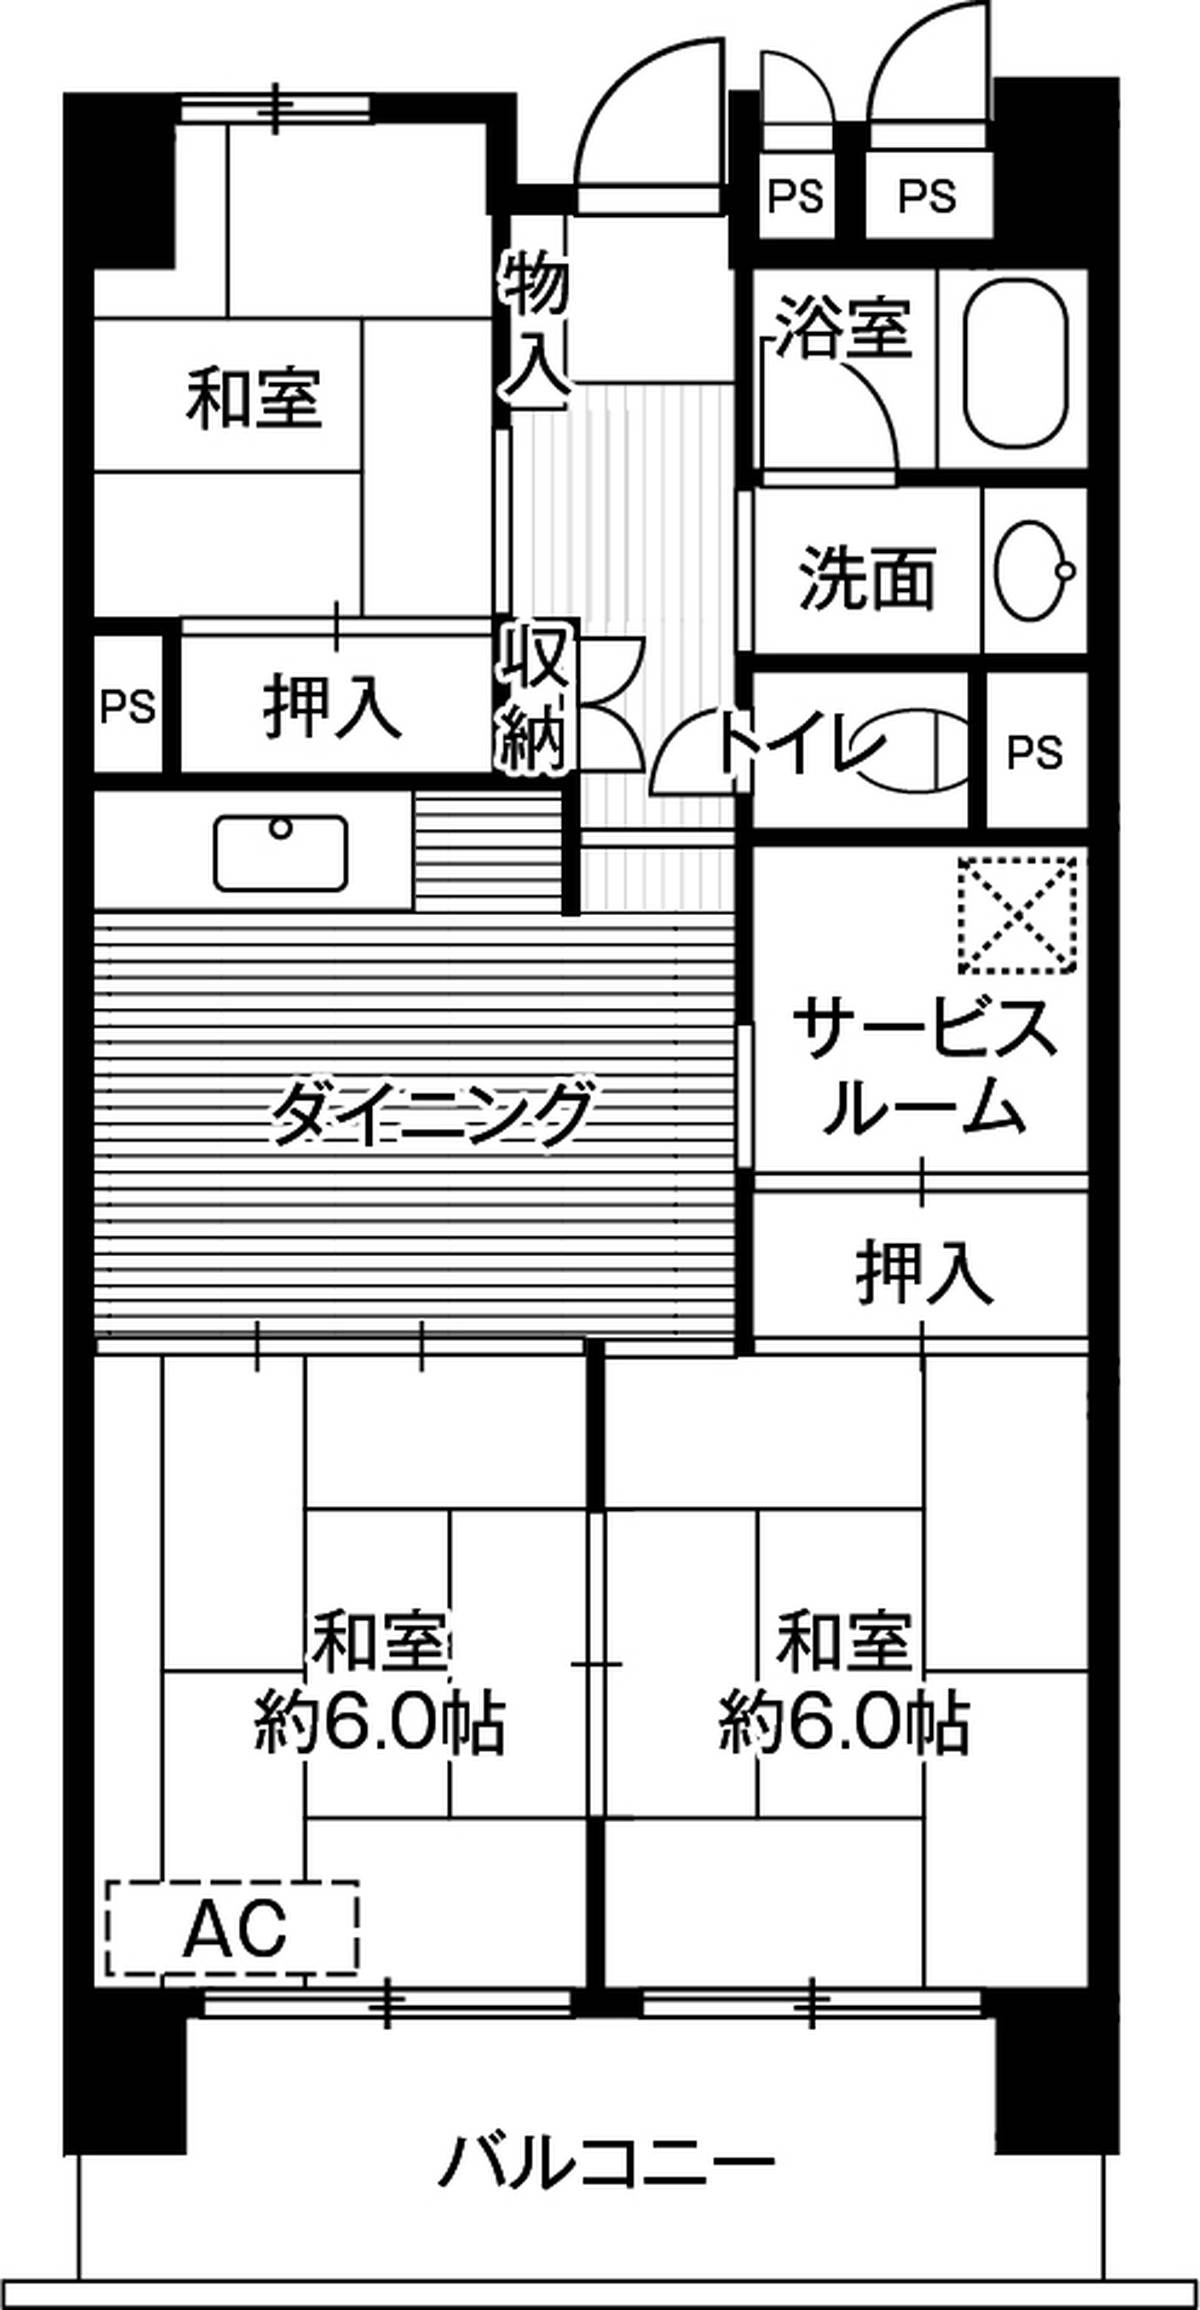 3SDK floorplan of Village House Narita Azuma Tower in Narita-shi